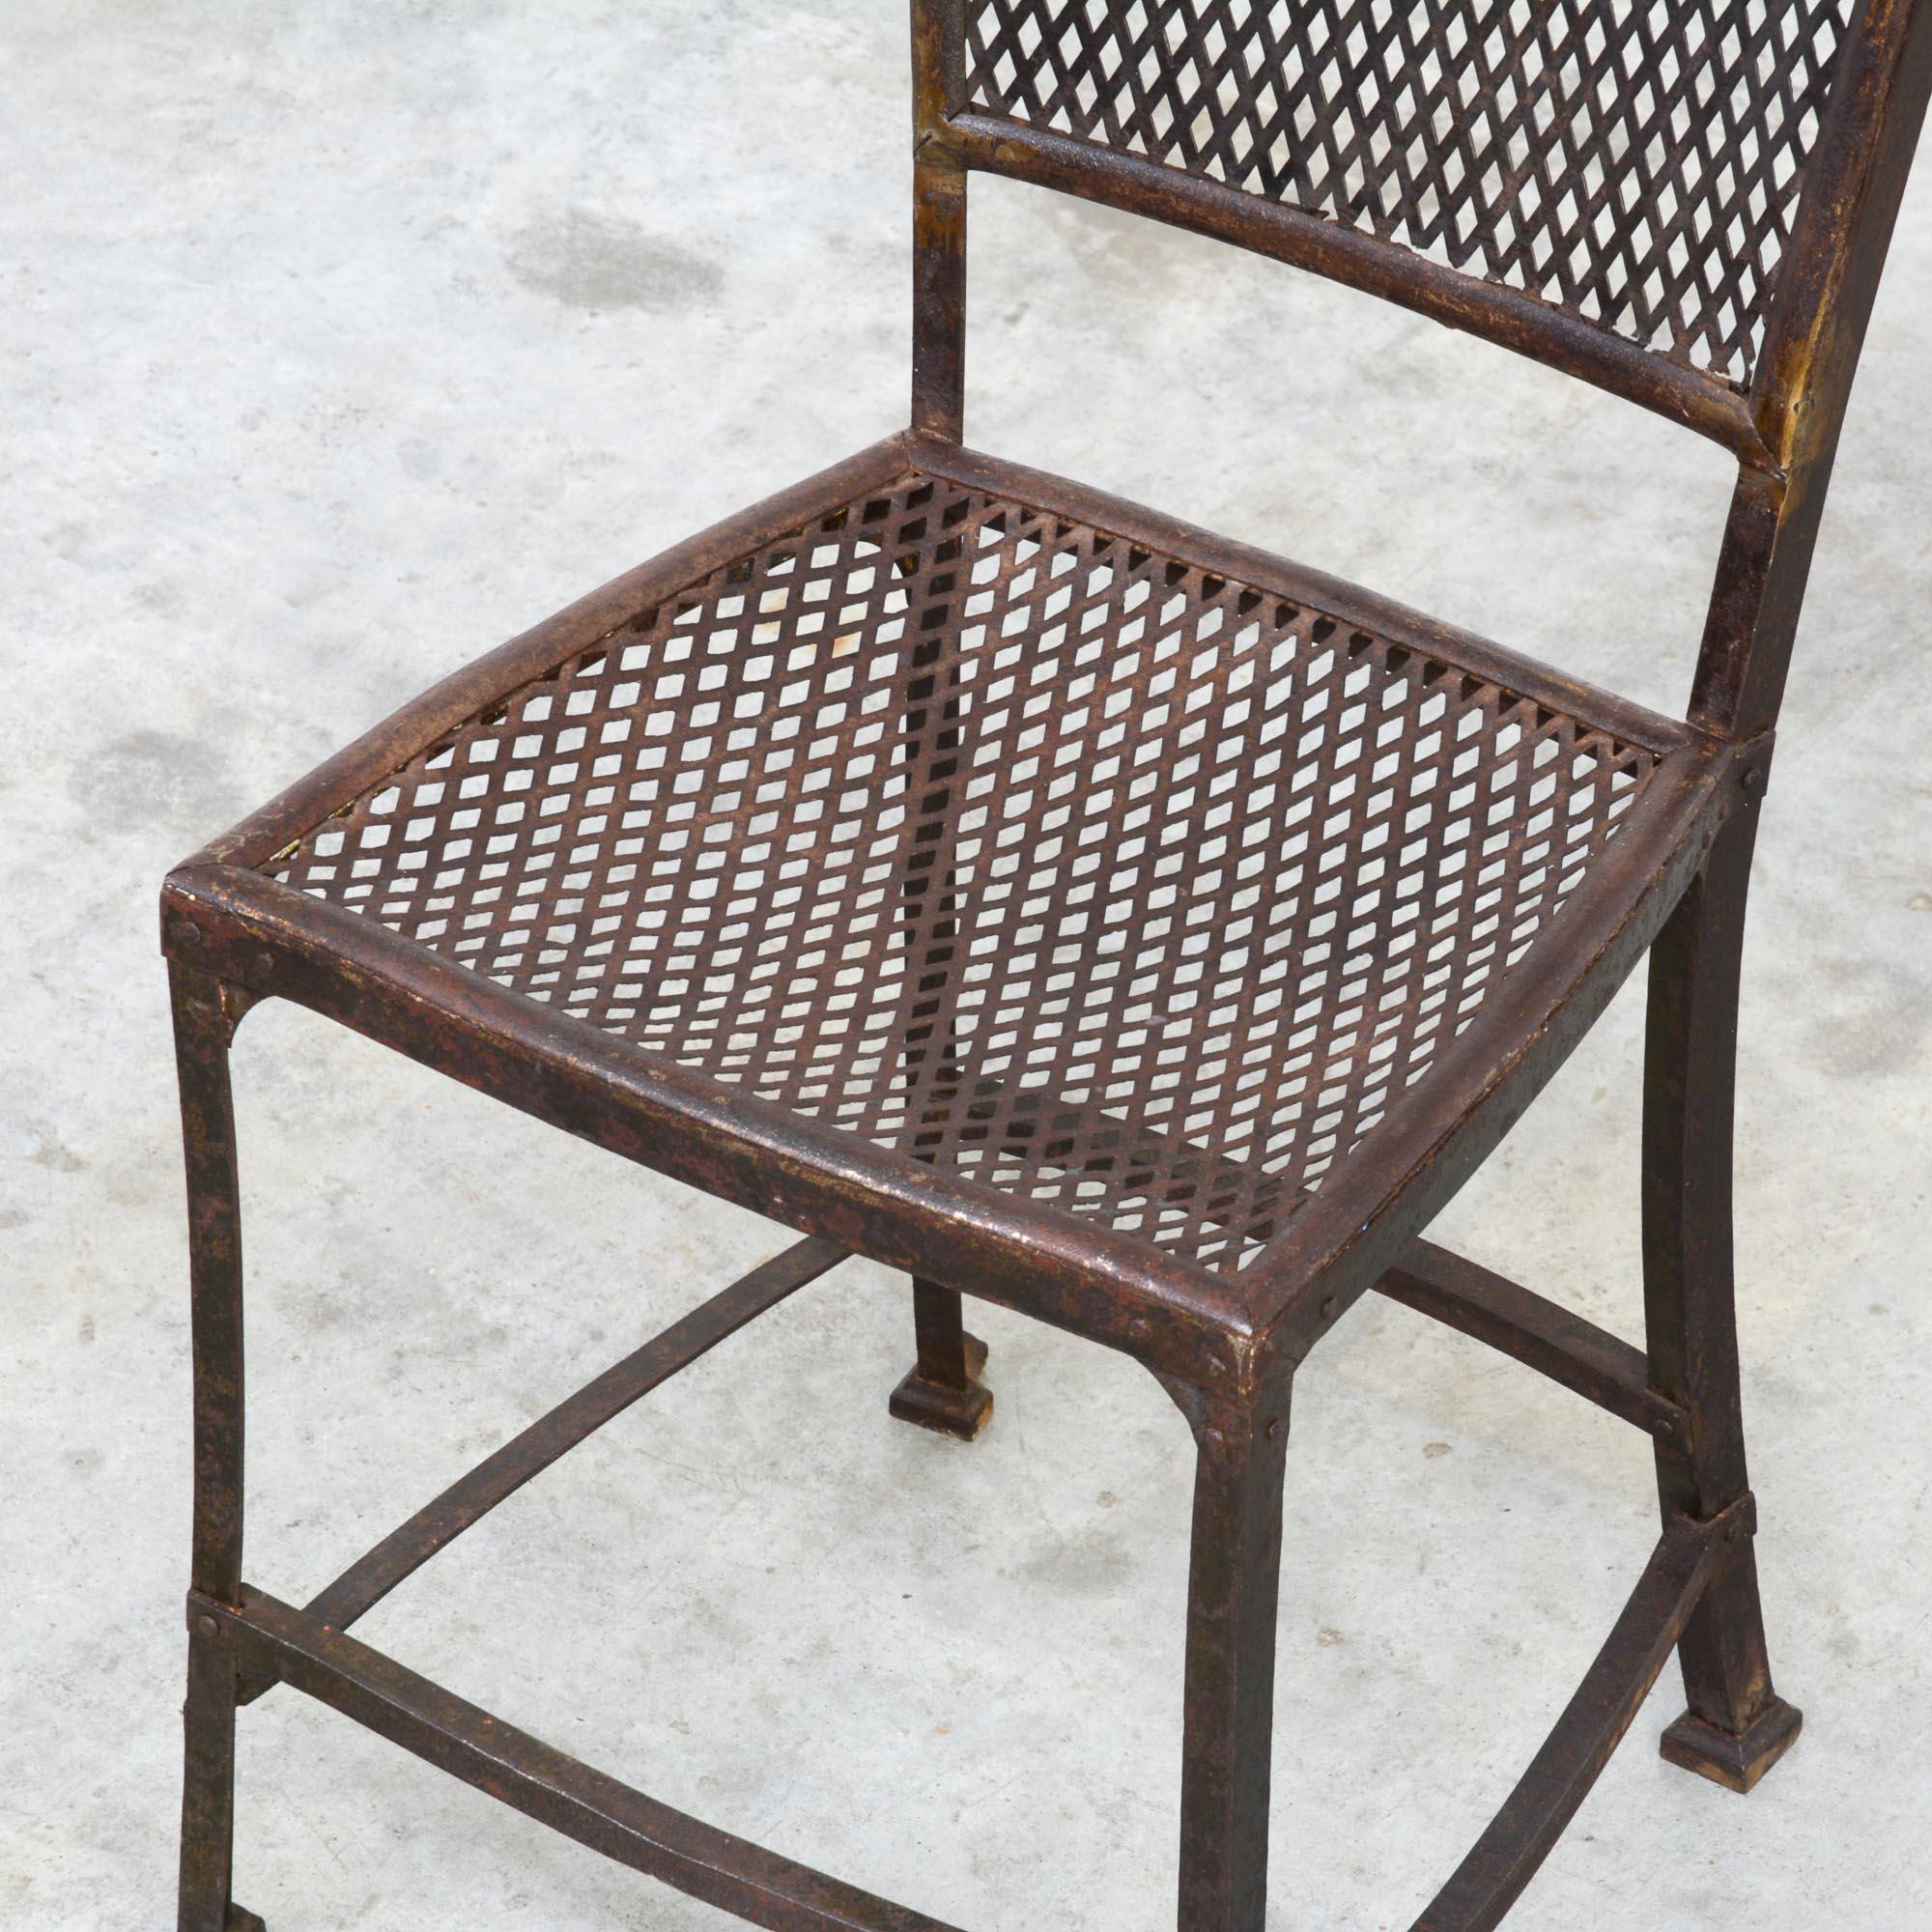 Rare Art Nouveau Garden Chair by G. Serrurier-Bovy For Sale 1